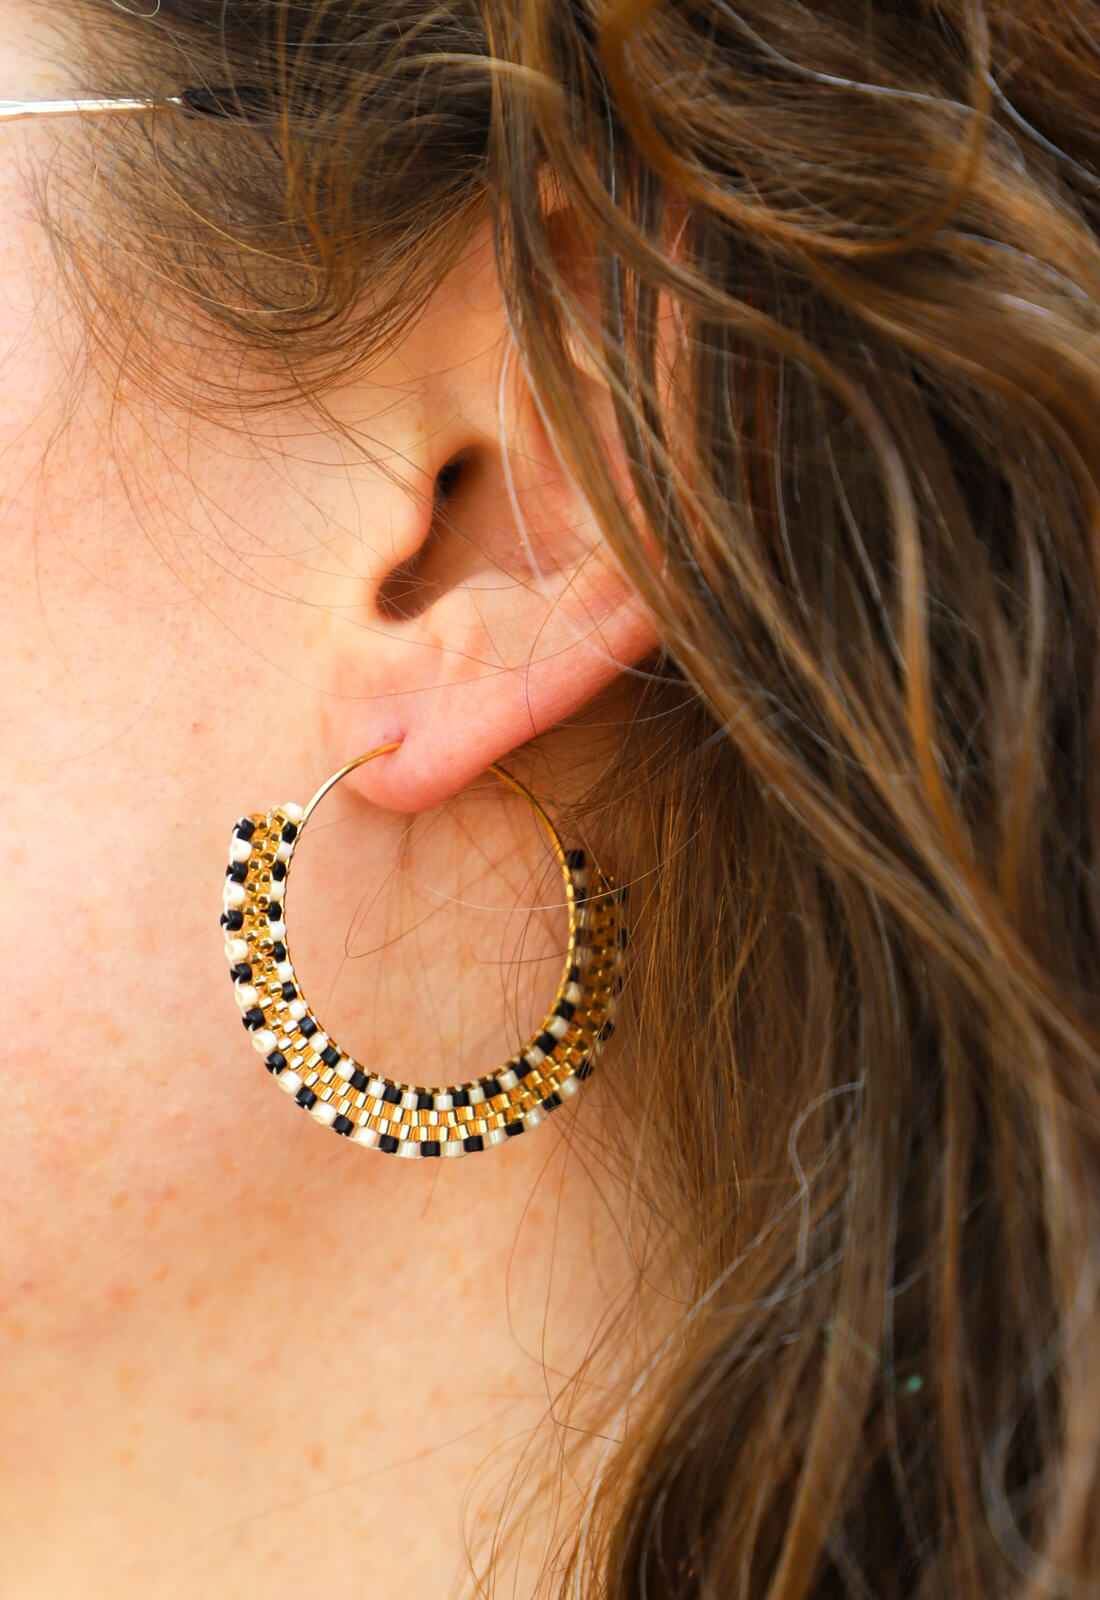 Beaded Hoop Earrings - Black and Gold Check